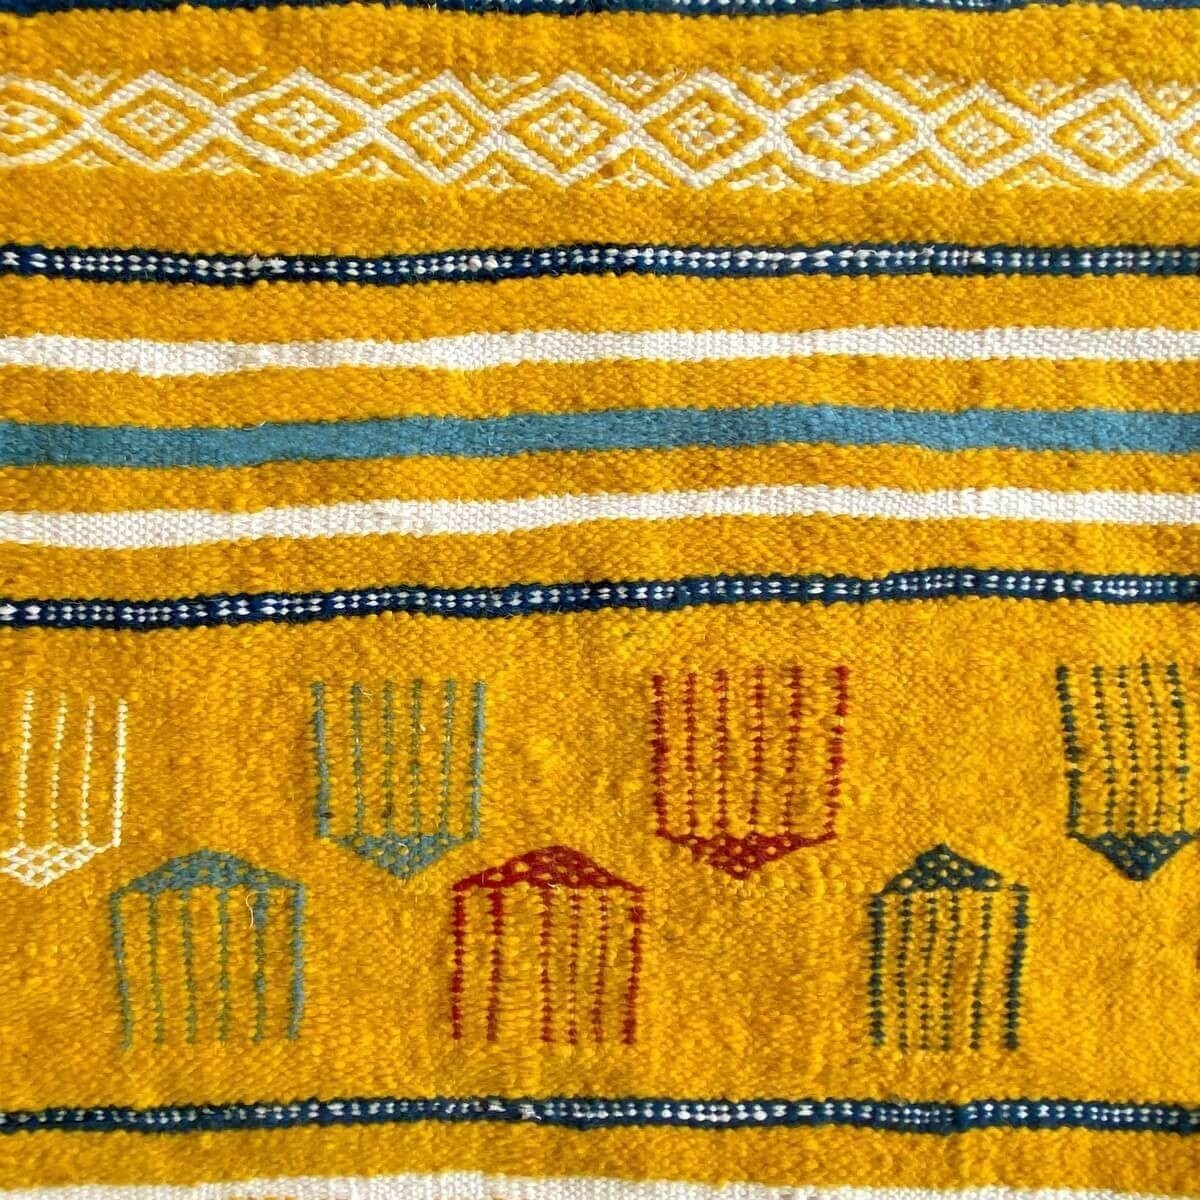 Berber tapijt Tapijt Kilim Sahraoui 144x258 Geel/Wit (Handgeweven, Wol, Tunesië) Tunesisch kilimdeken, Marokkaanse stijl. Rechth